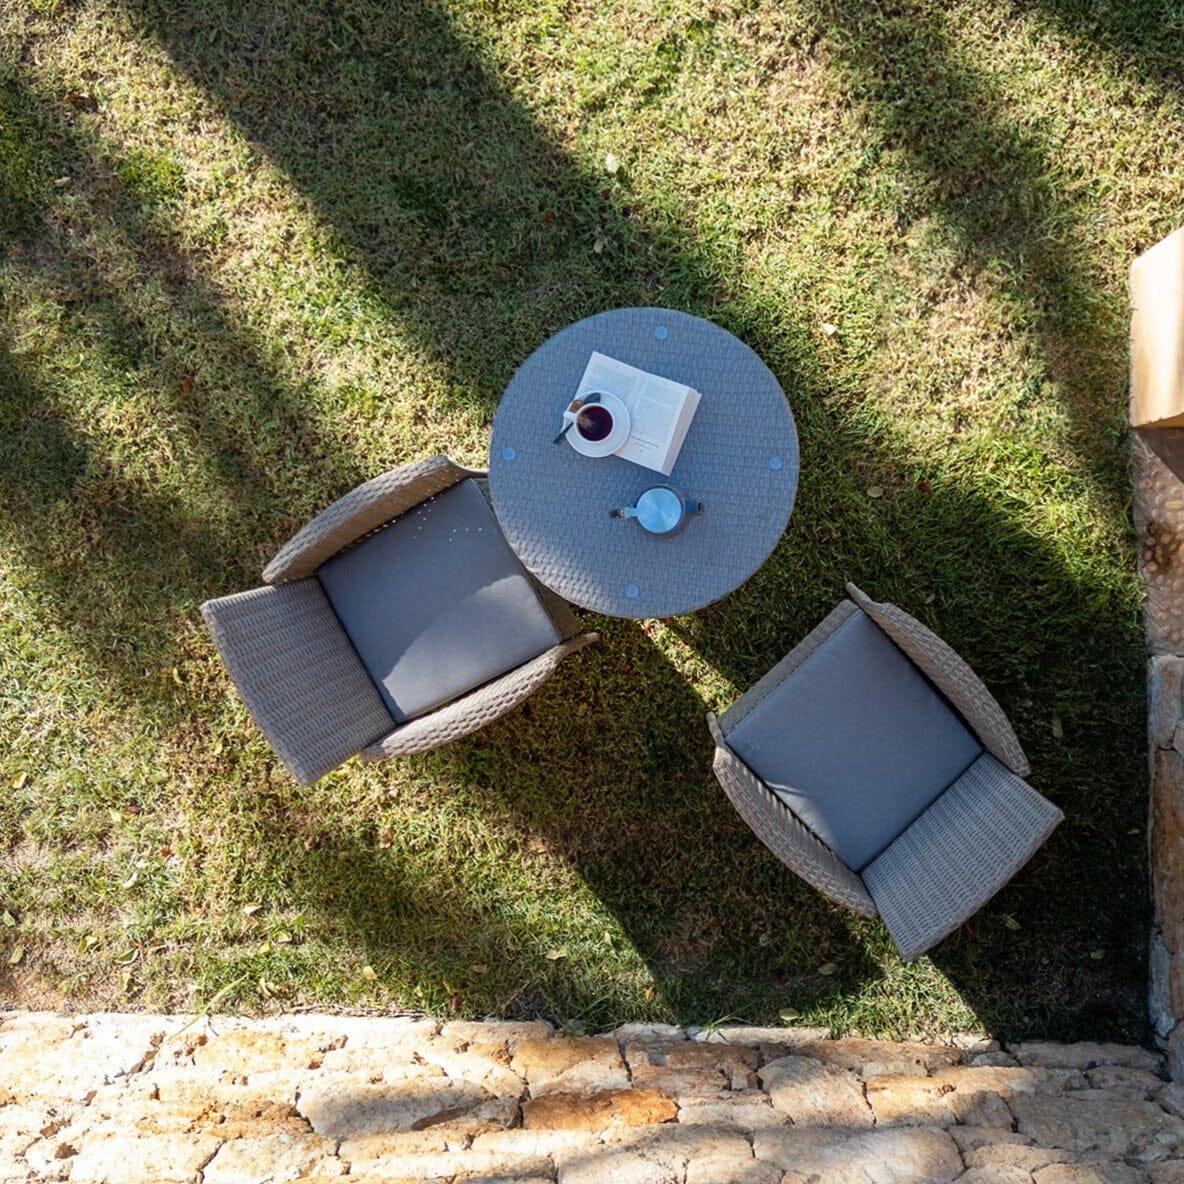 Kemble 2 Seater Rattan Bistro Outdoor Dining Set in Natural Brown - Garden Furniture - Laura James